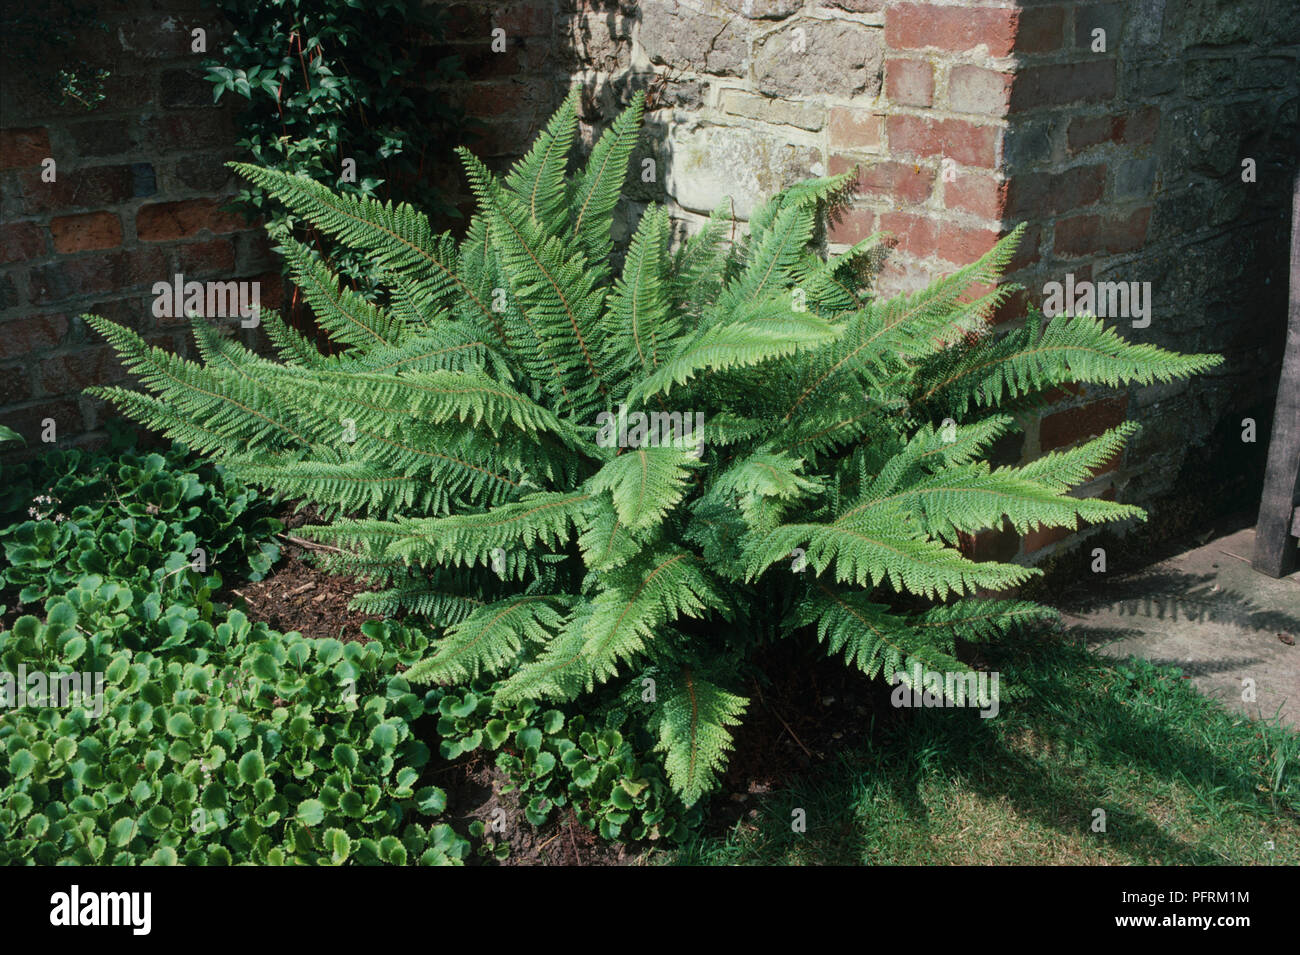 Polystichum setiferum 'Divisilobum Group' (Soft shield fern), evergreen fern against a wall Stock Photo